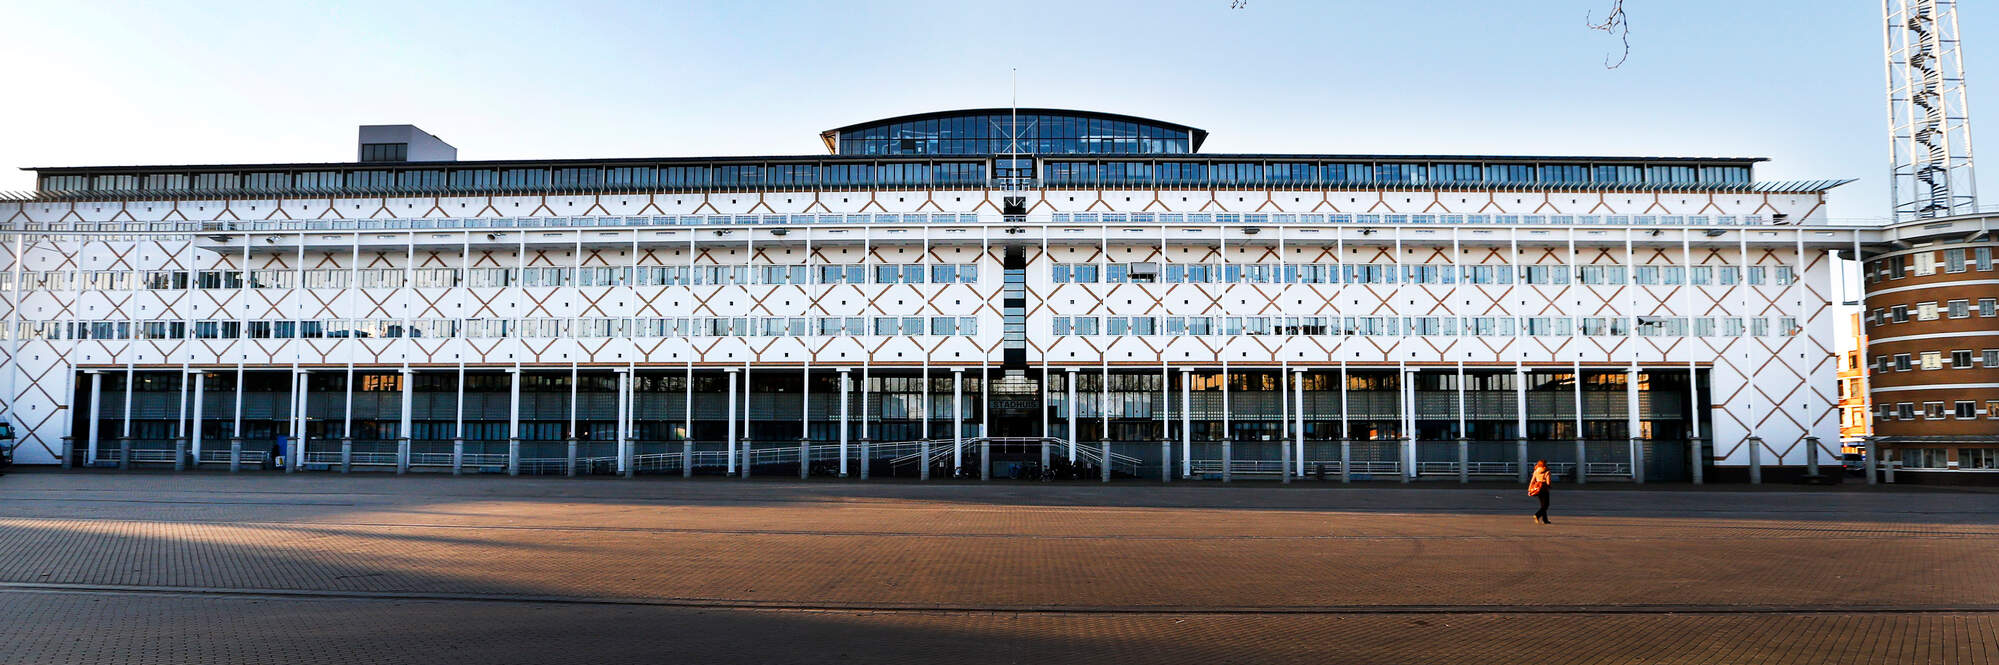 Stadhuis Apeldoorn